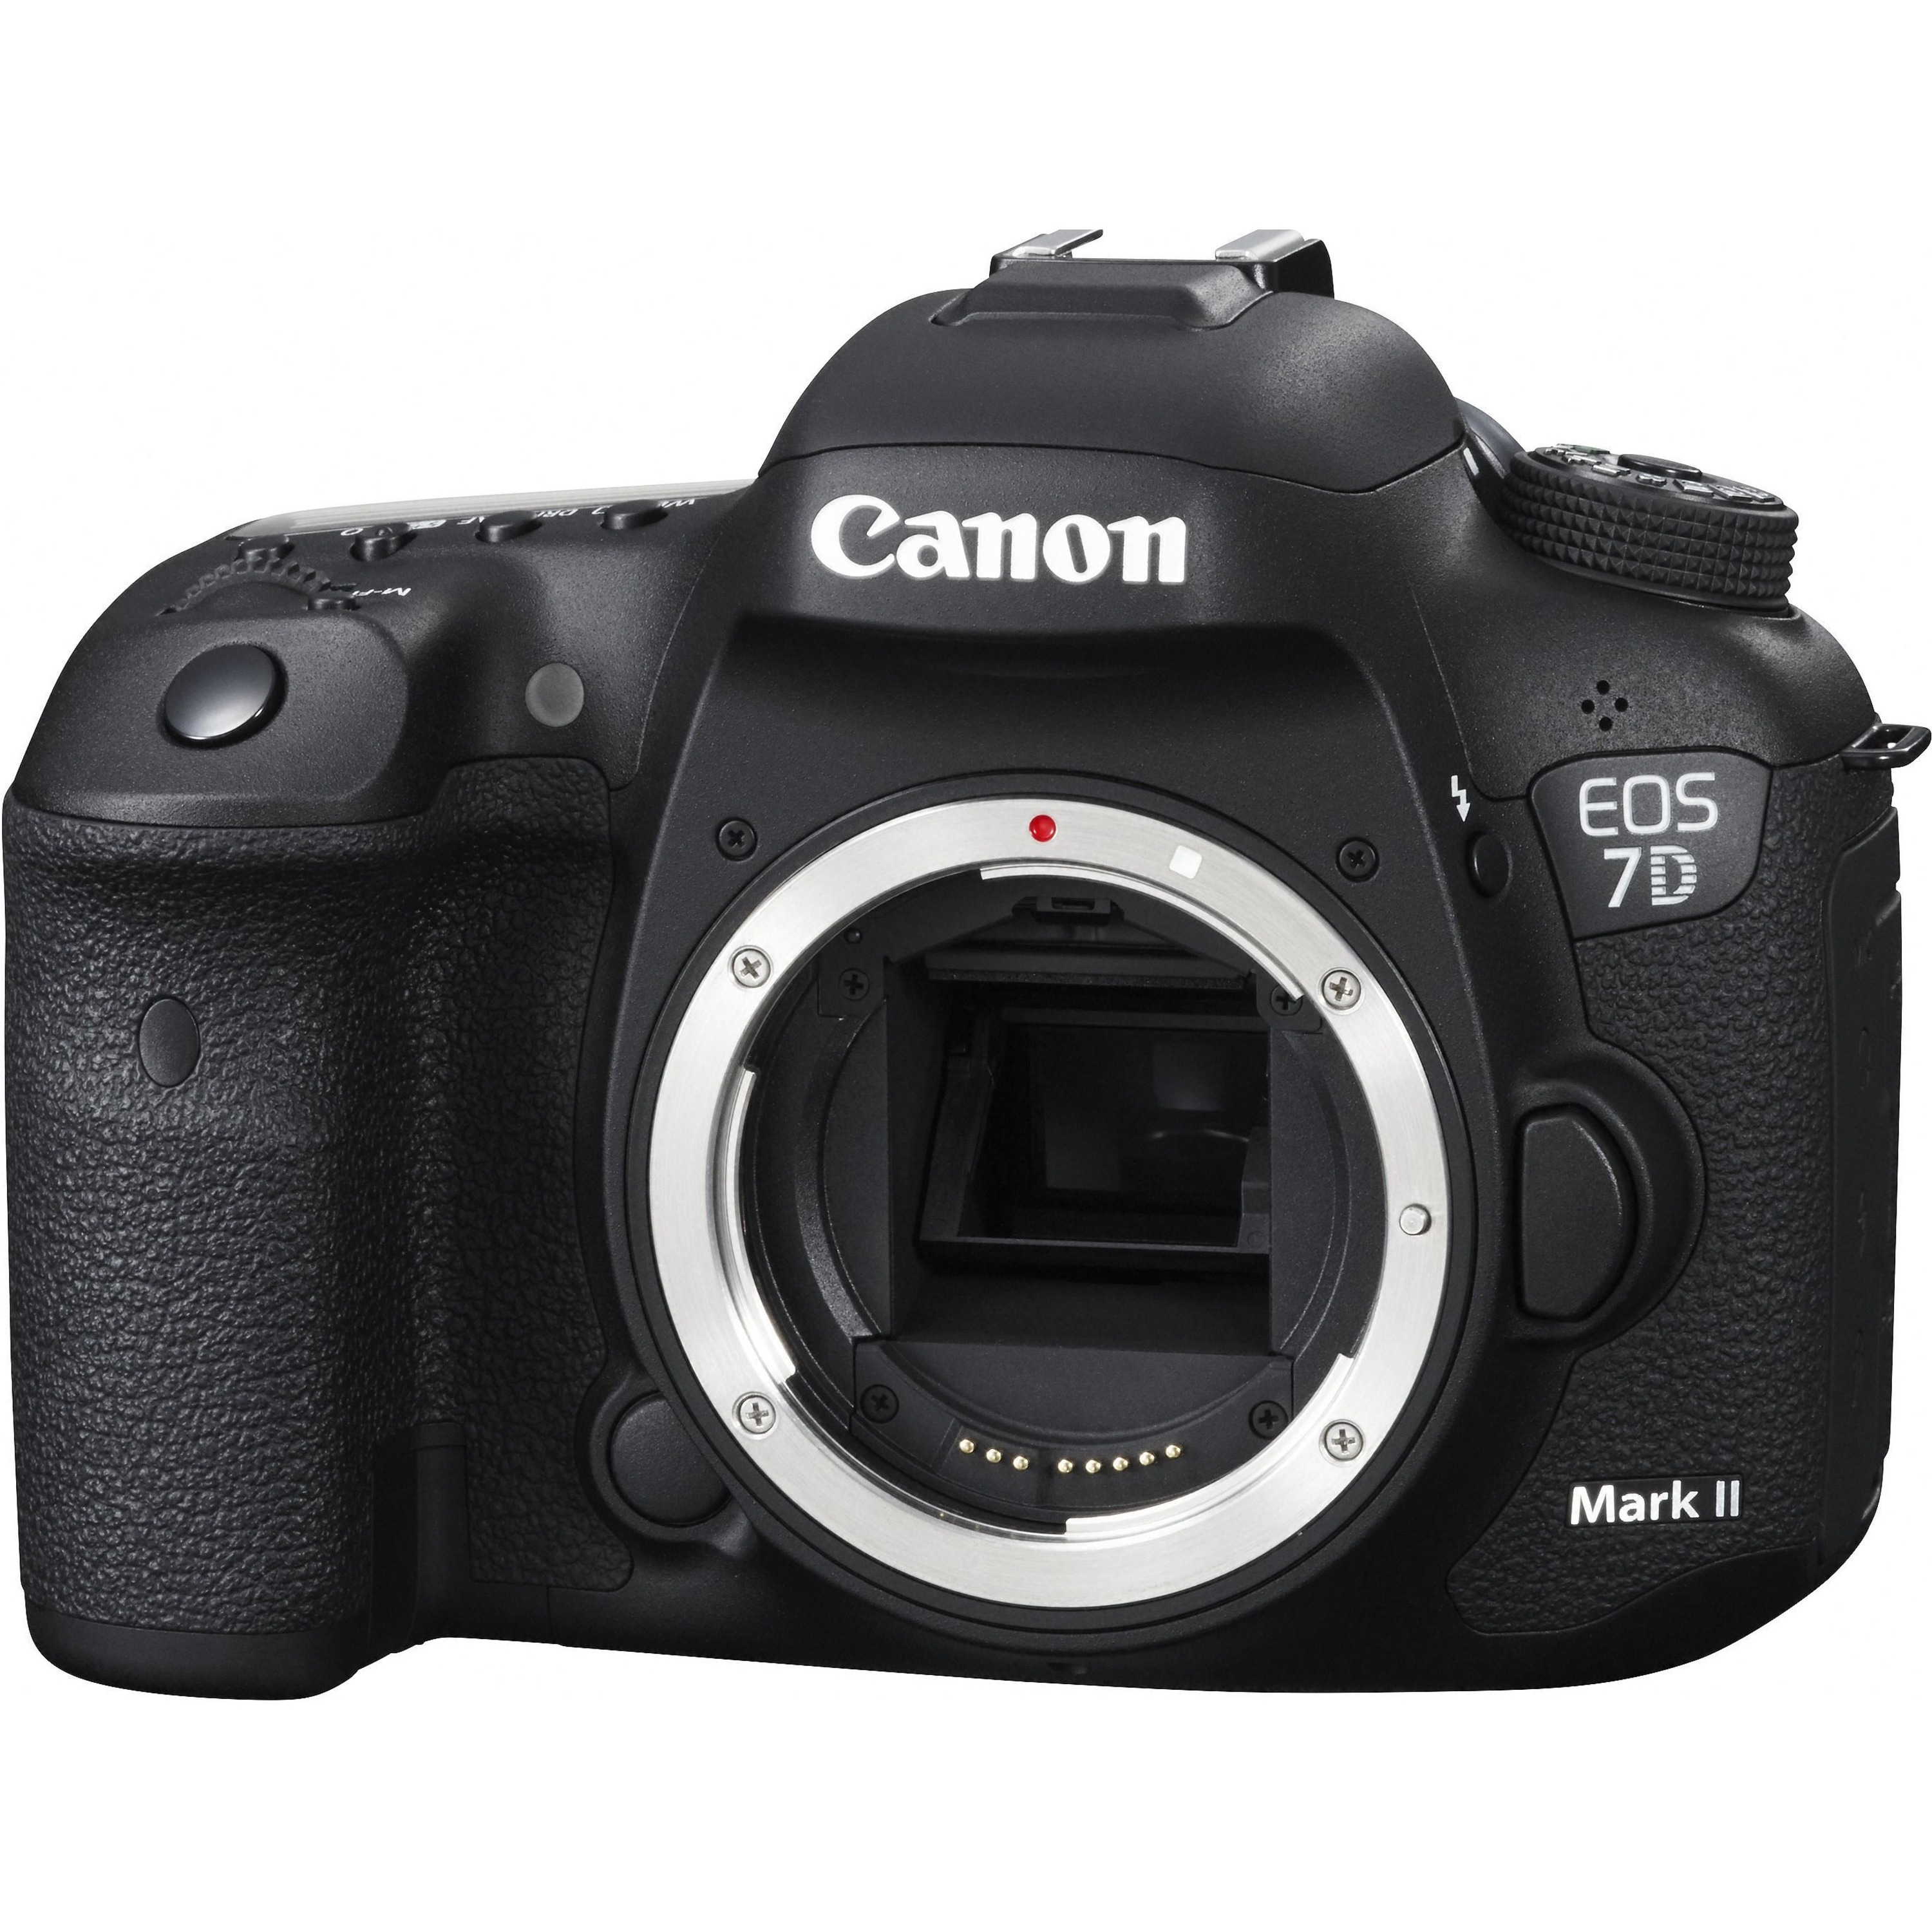 Canon EOS 7D Mark II 9128B016 Black Digital SLR Camera with 18 